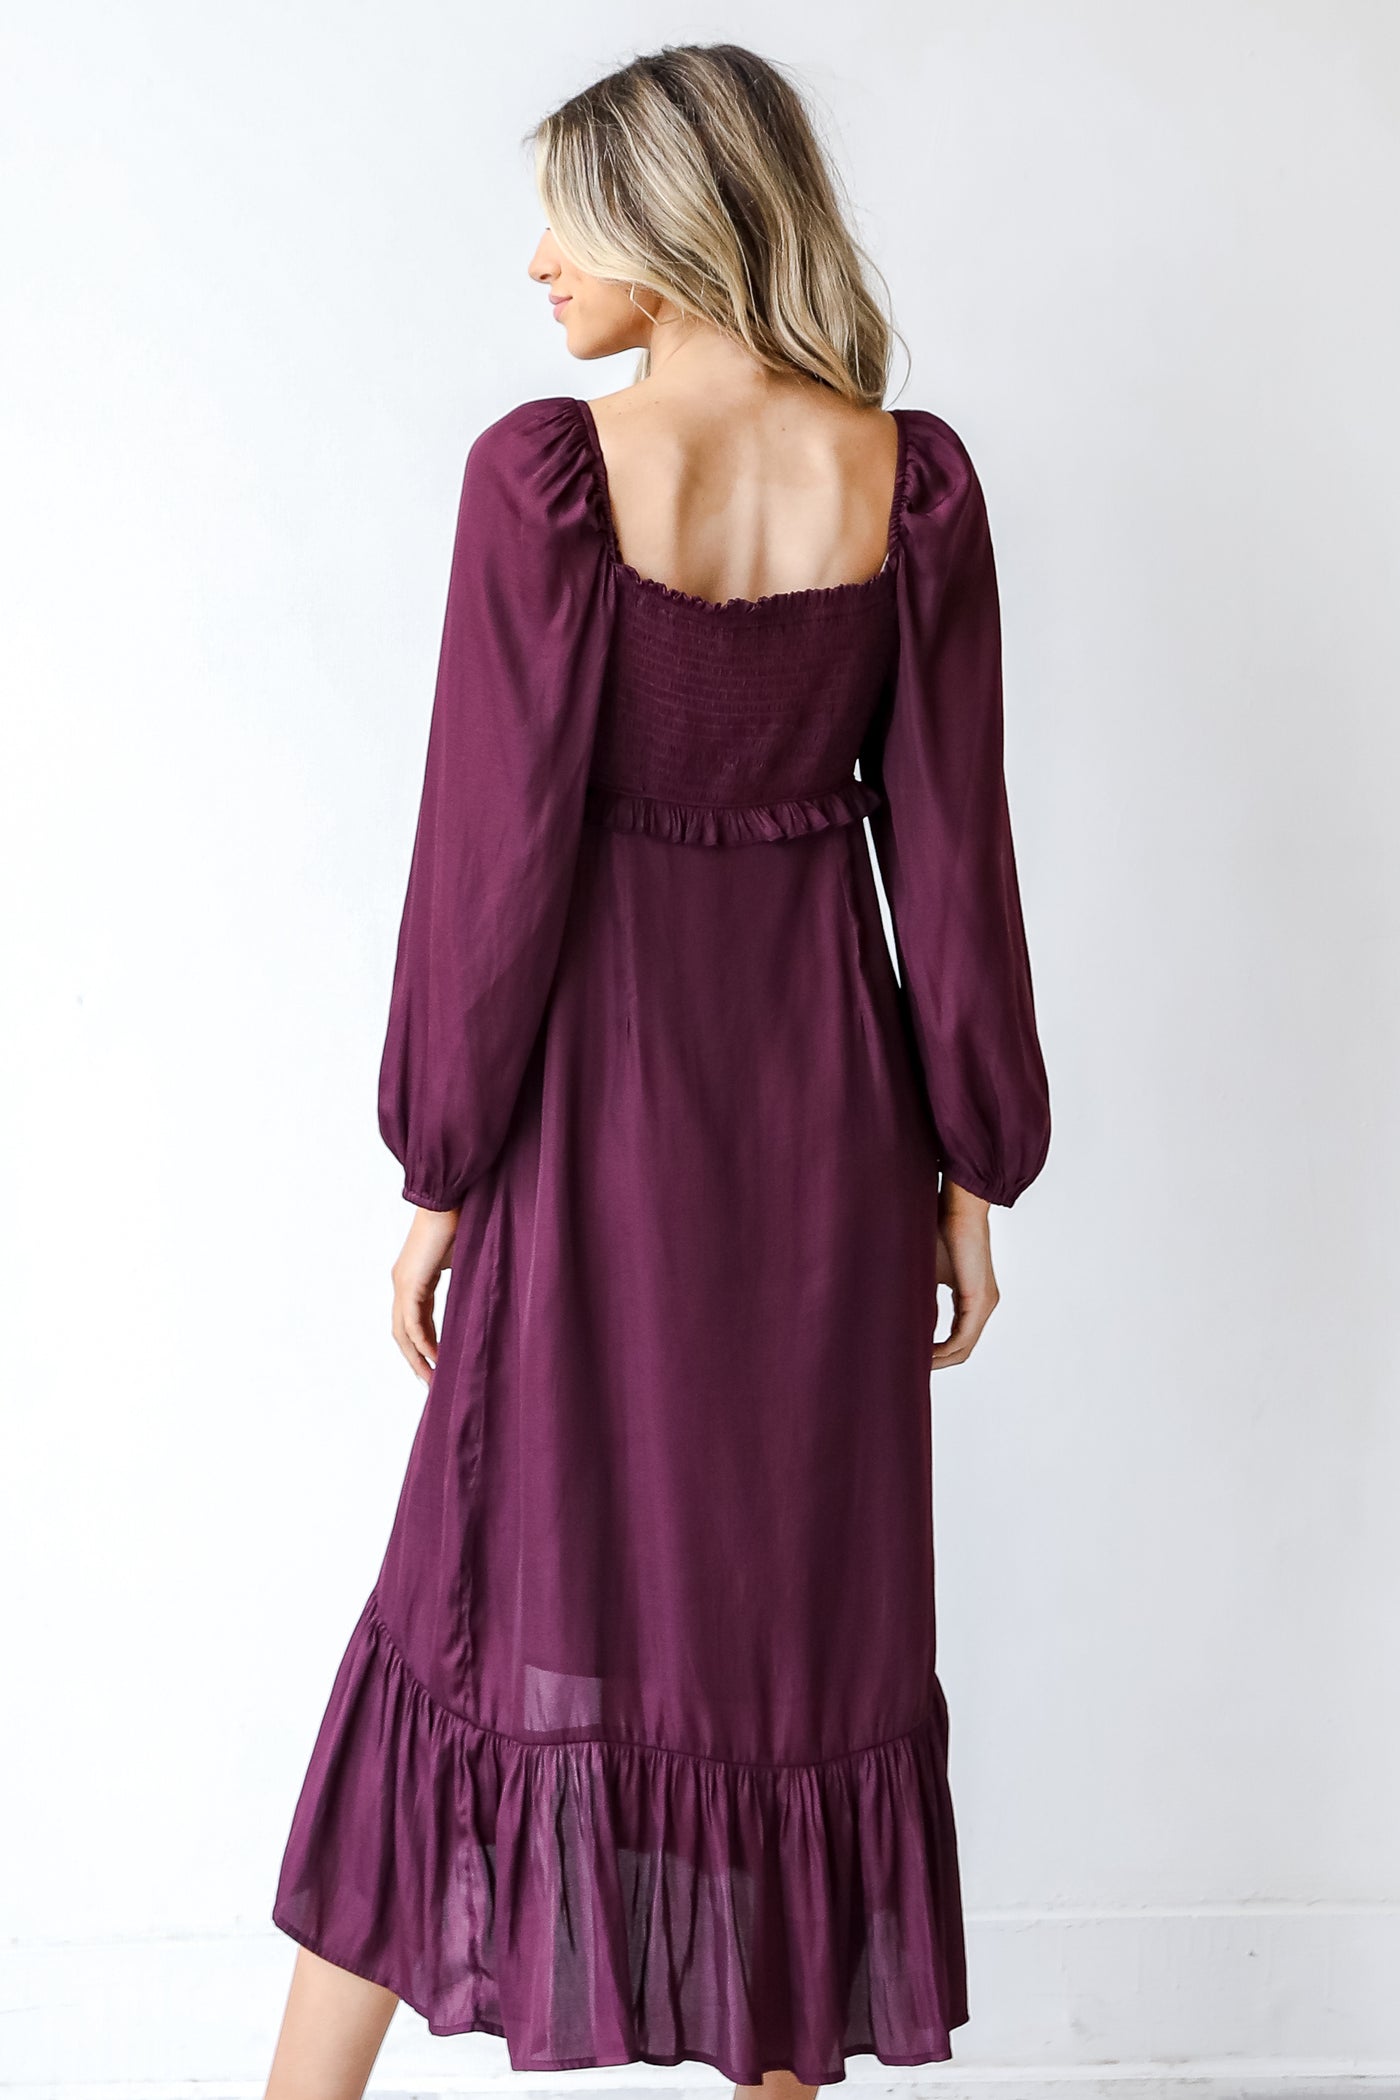 Midi Dress in burgundy back view